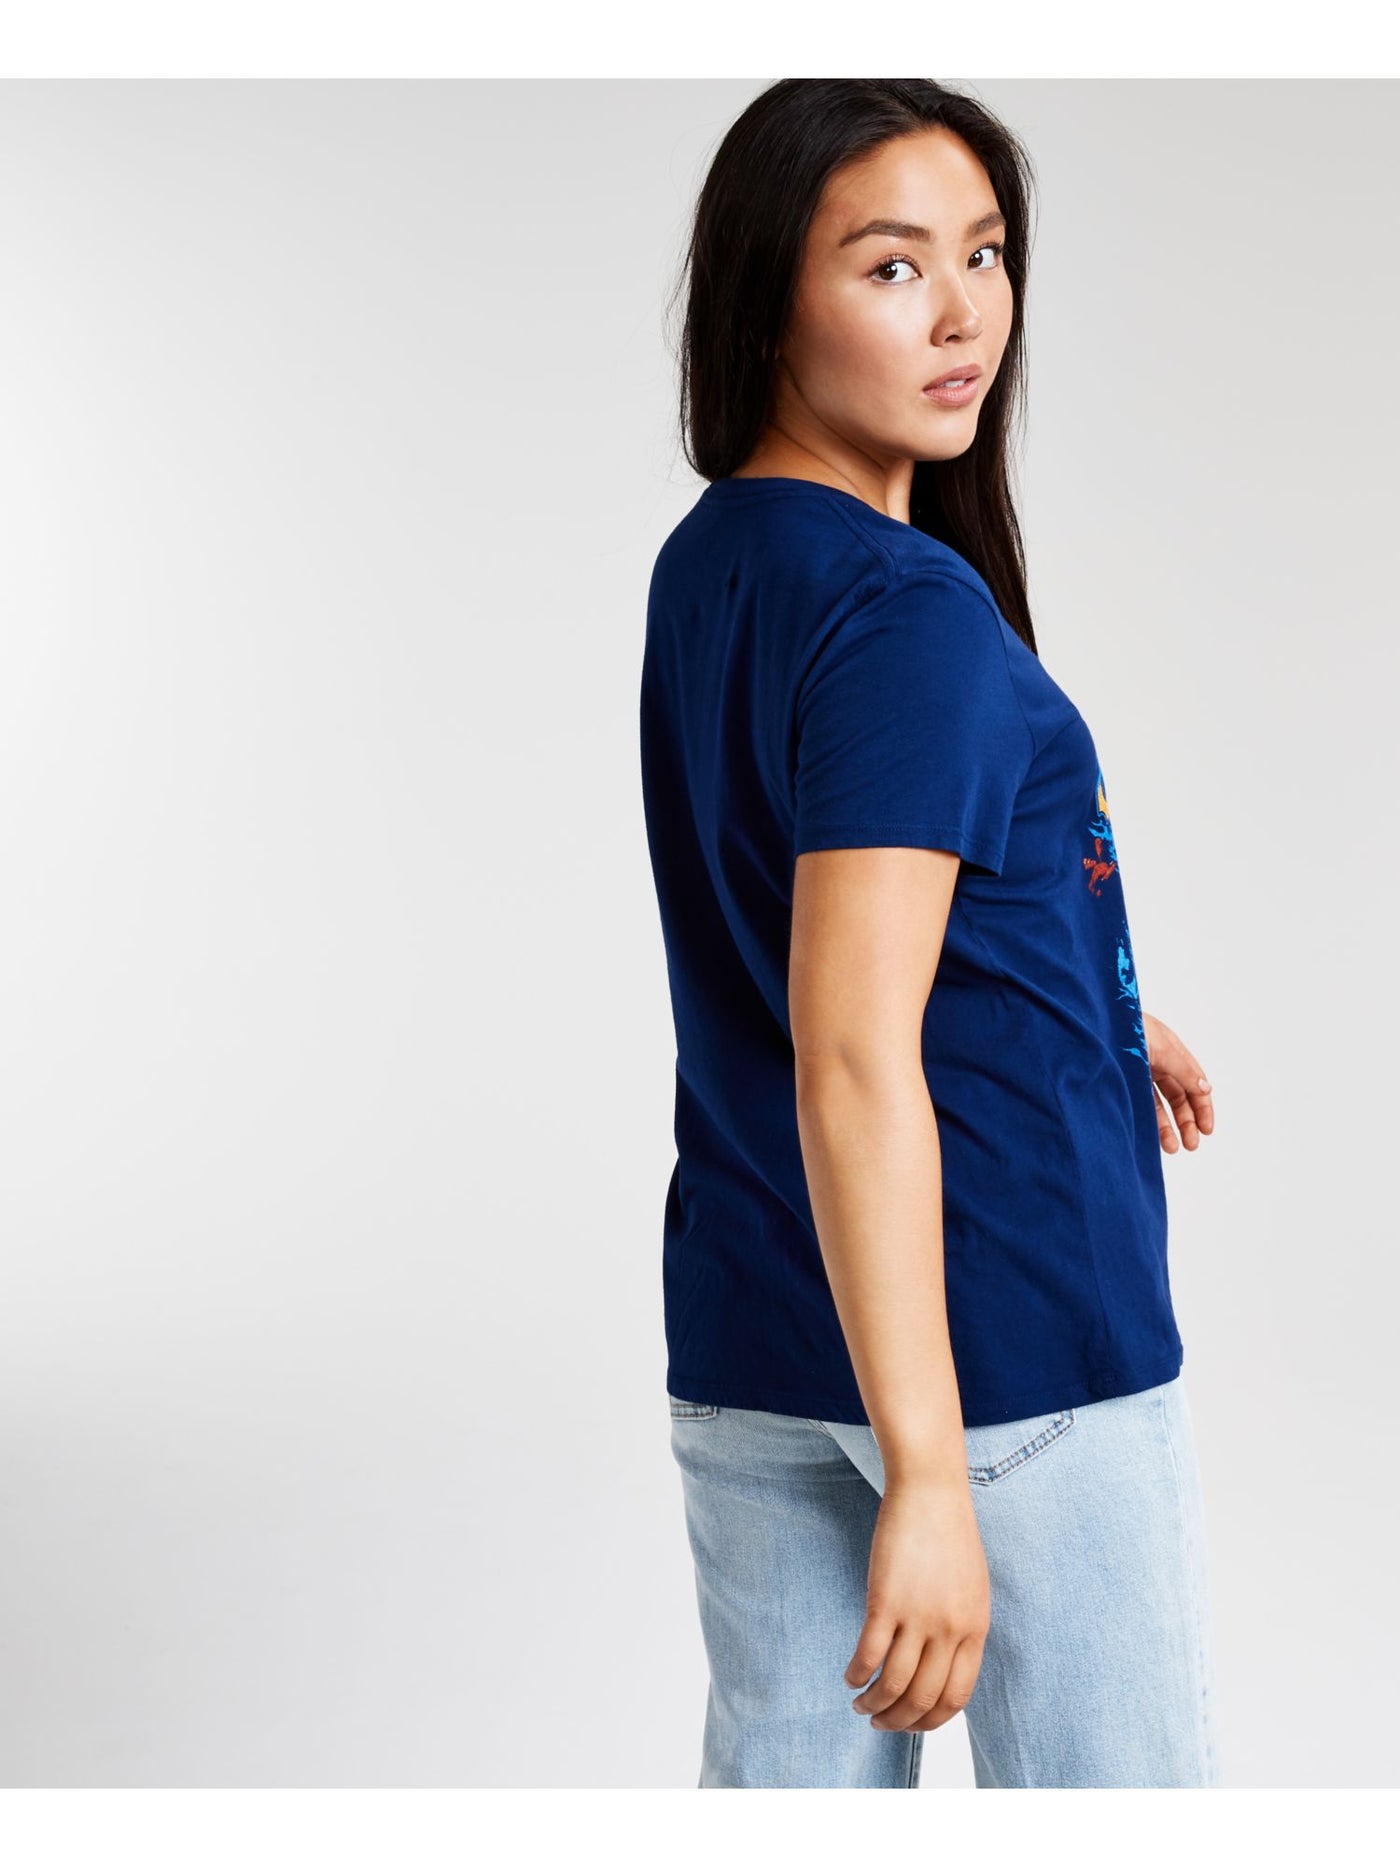 HYBRID APPAREL Womens Blue Stretch Graphic Short Sleeve Crew Neck T-Shirt Juniors S